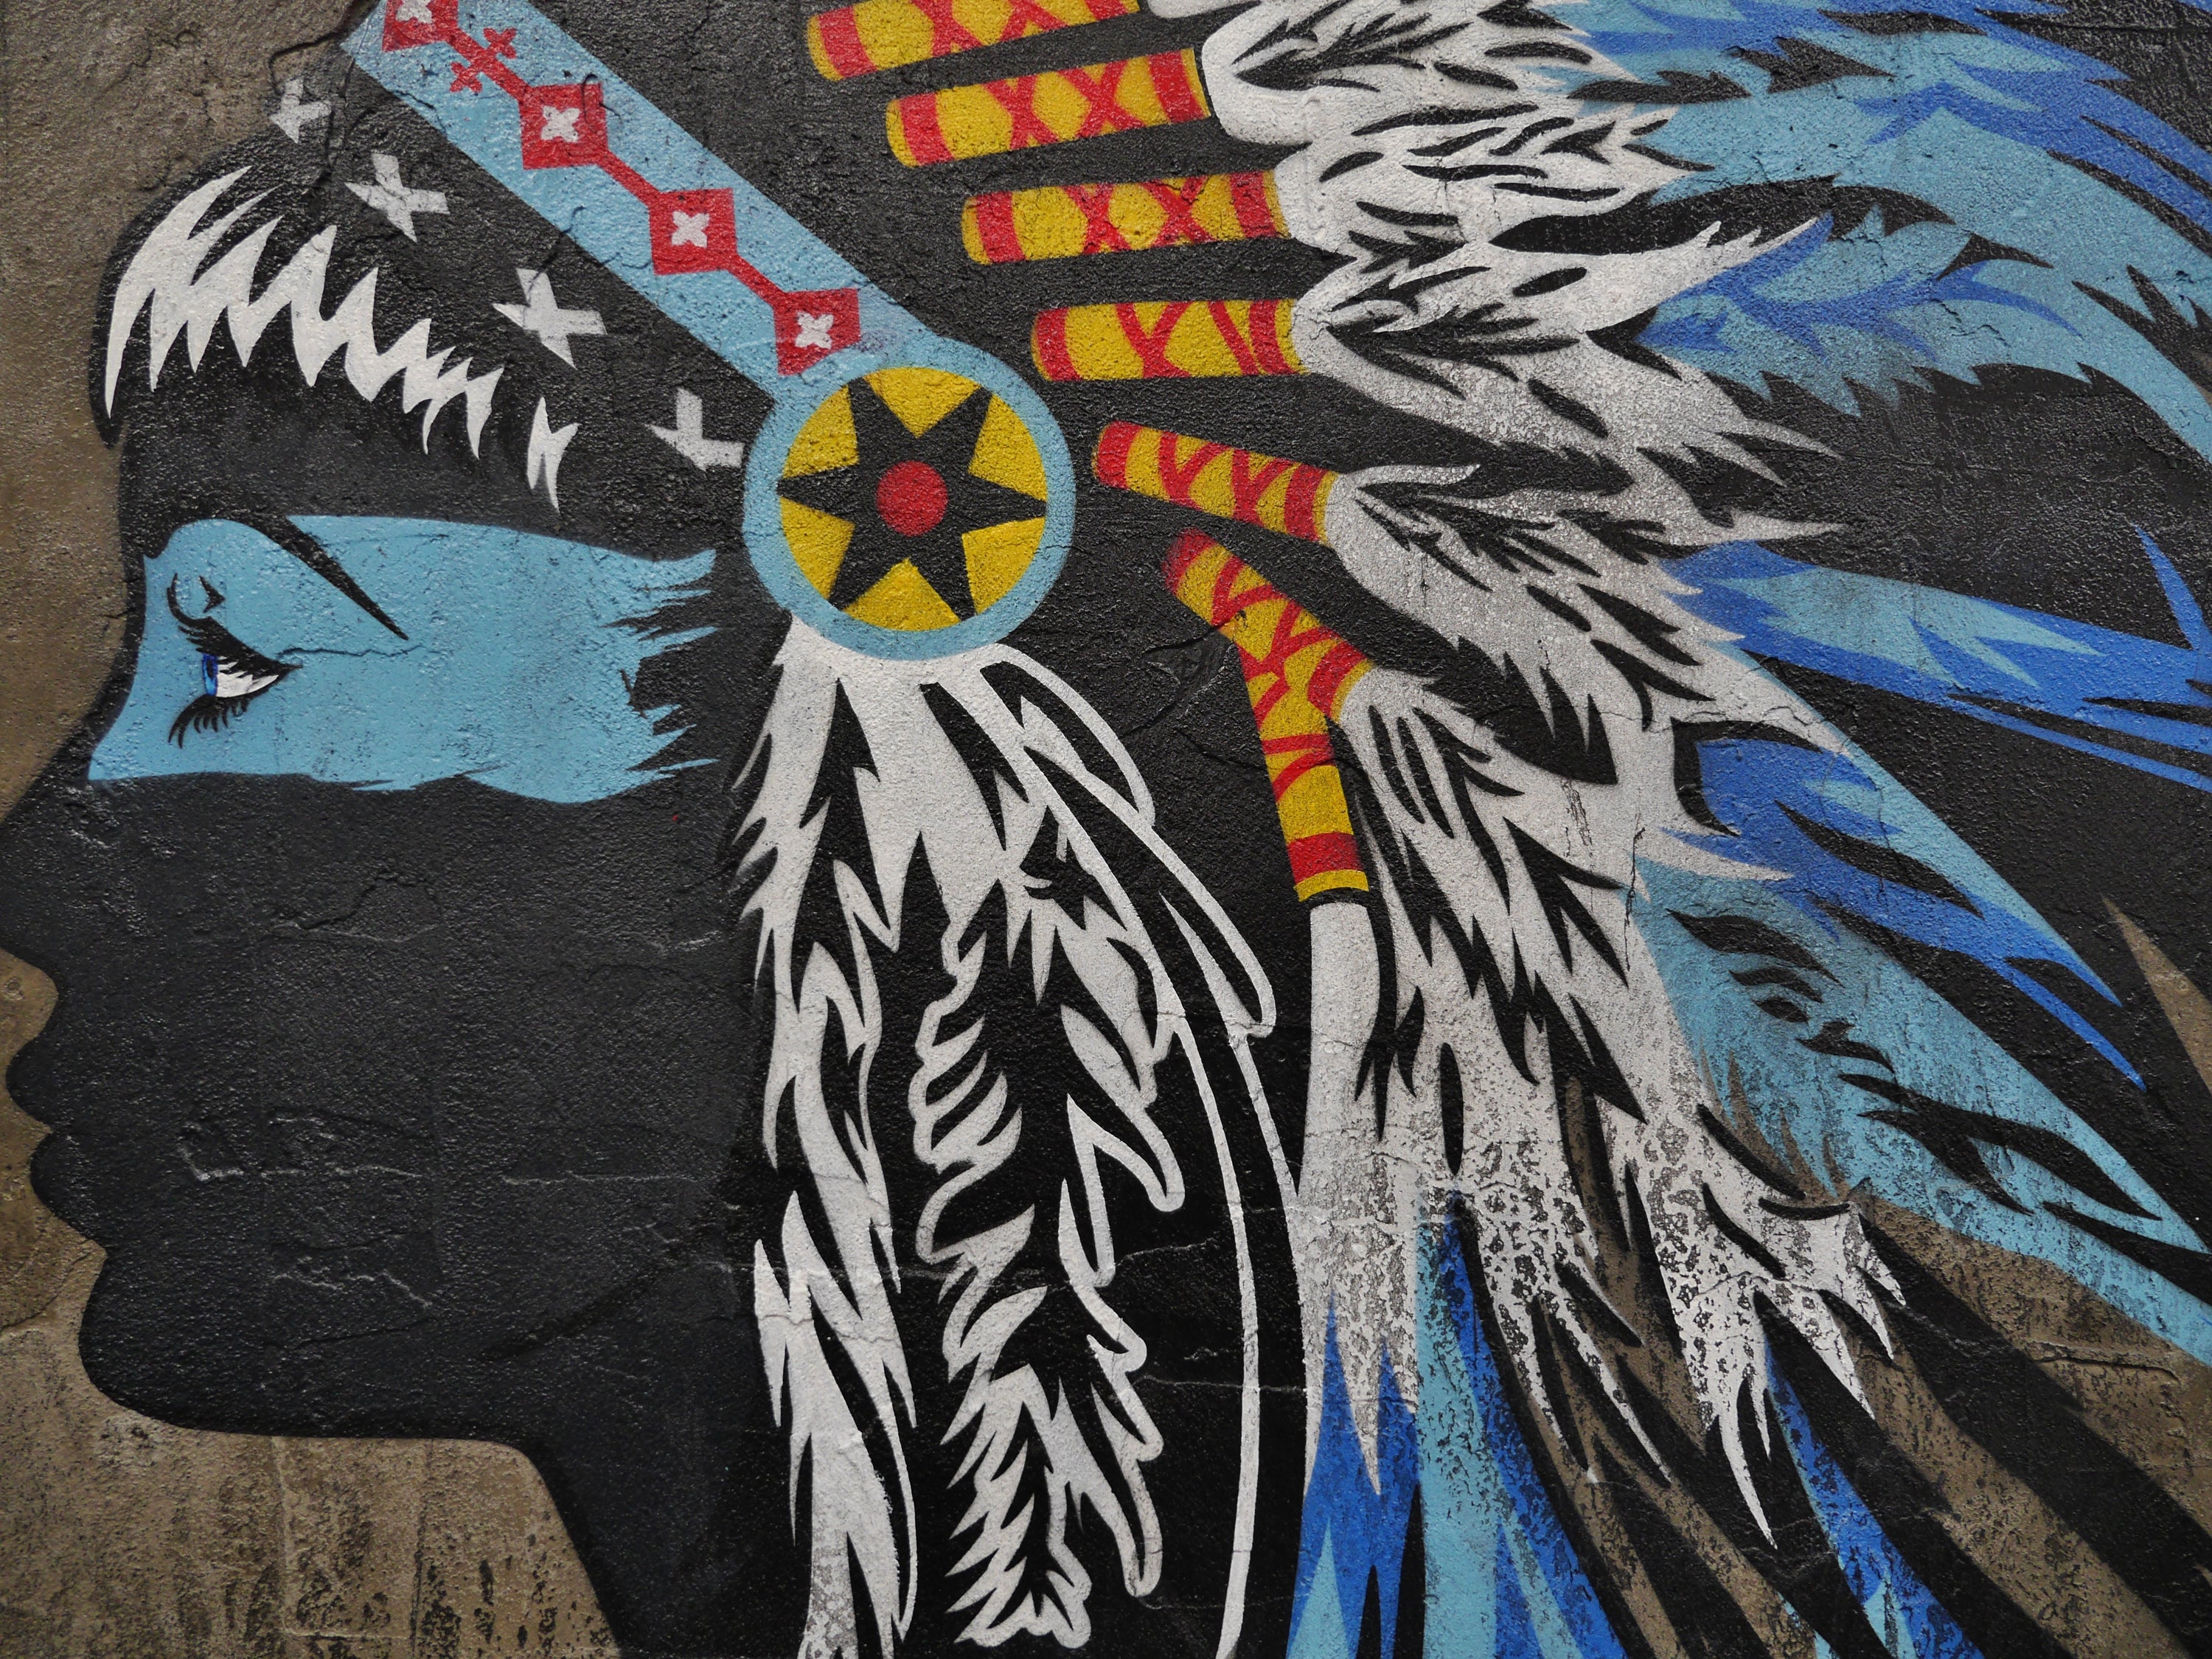 Sky Feathers 140cm x 100cm Blue Indian Headdress Textured Urban Pop Art Painting (SOLD)